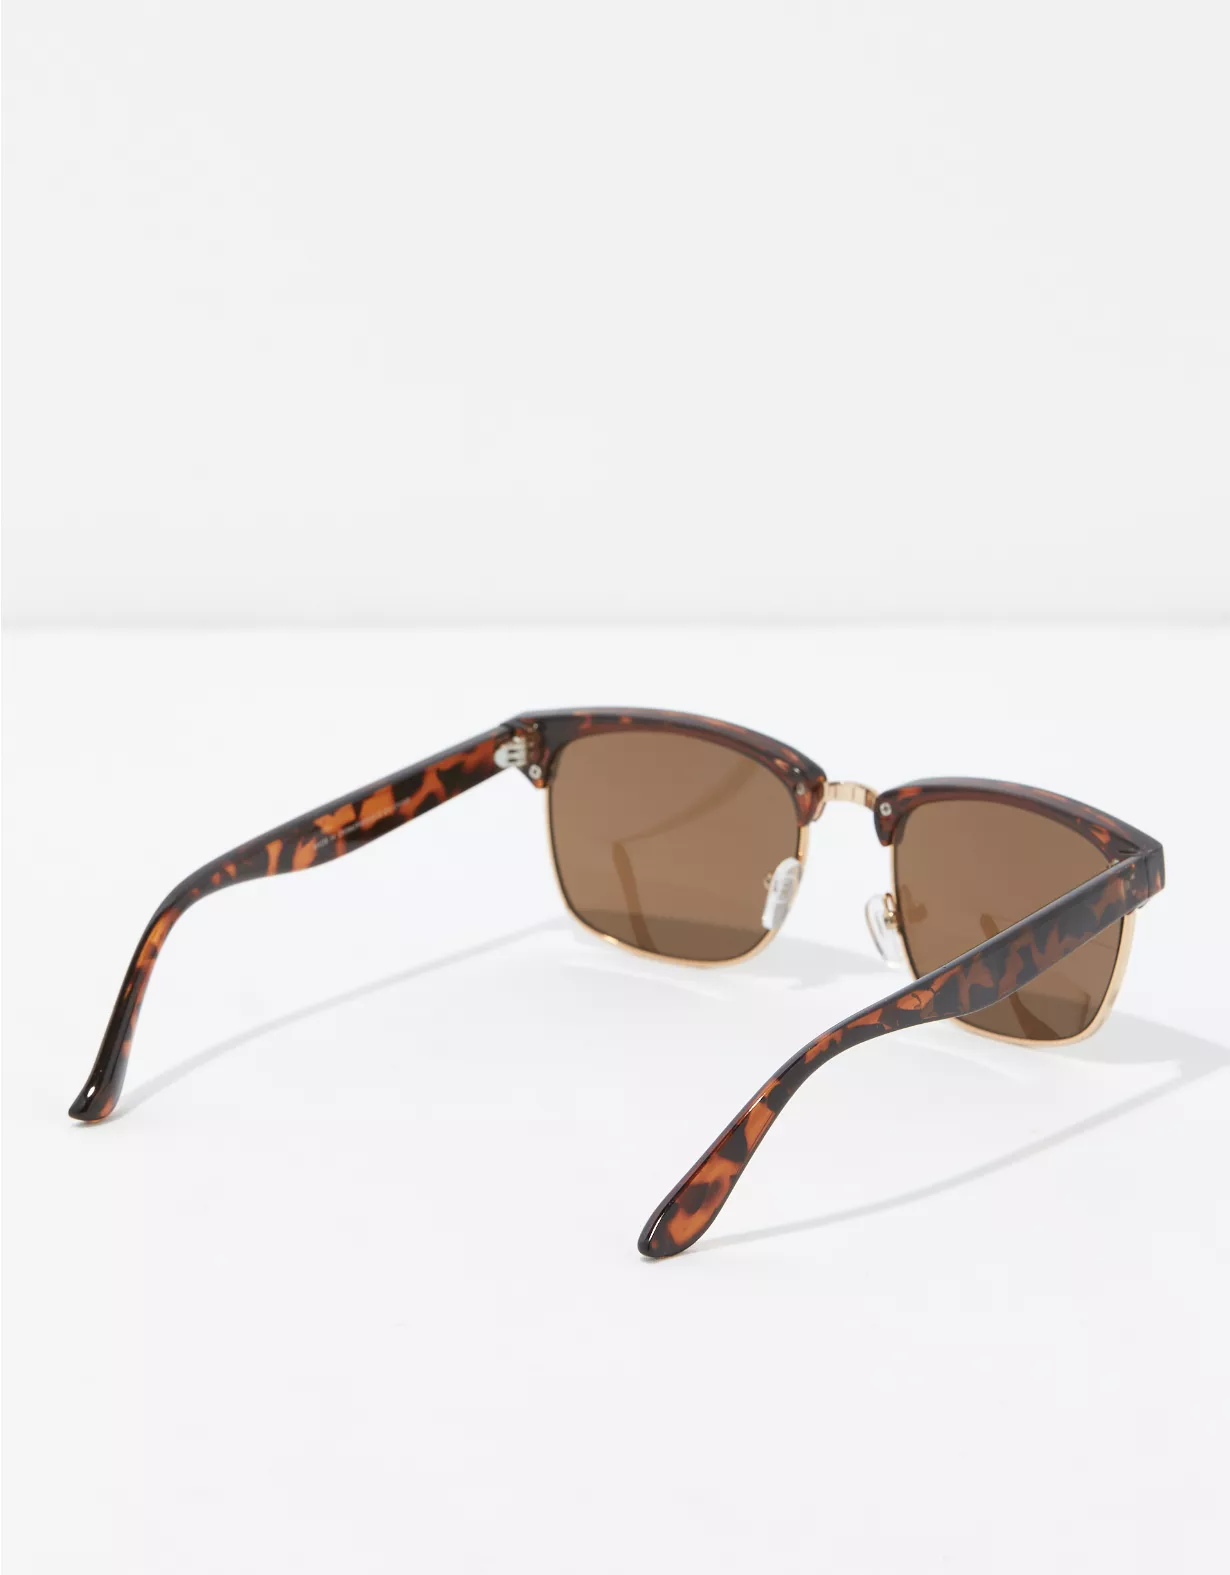 AE Tortoise Clubmaster Sunglasses